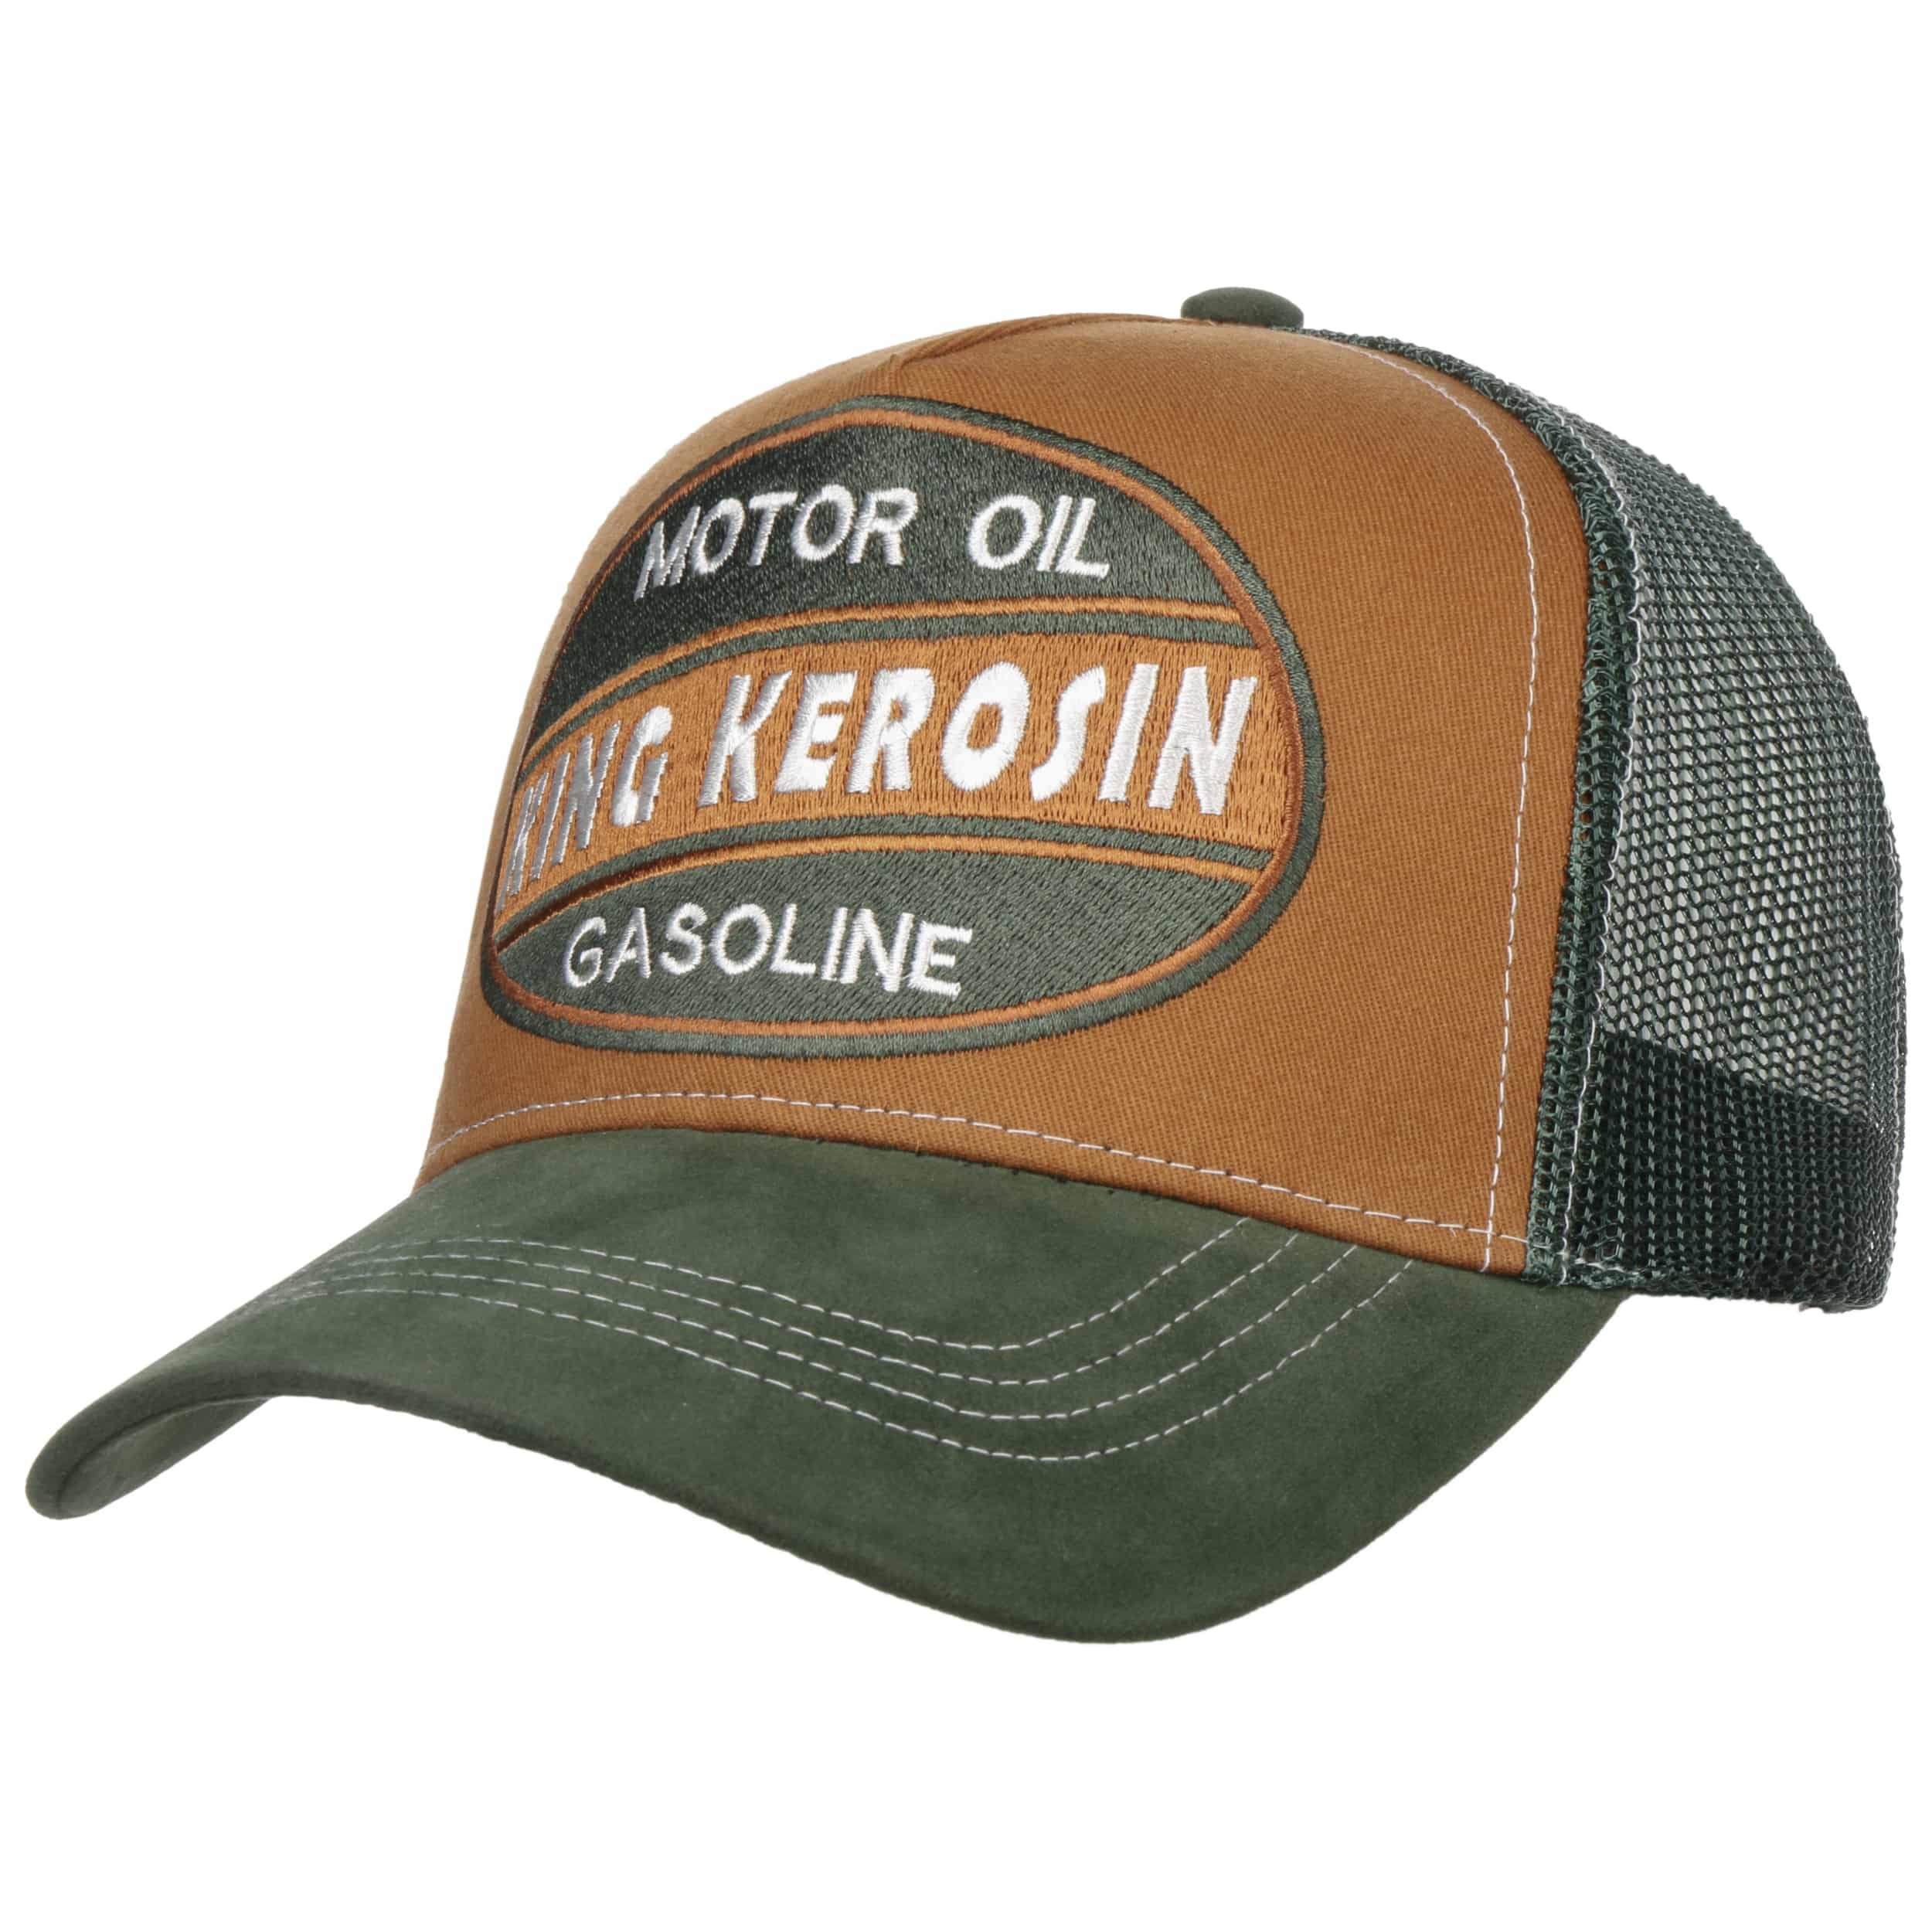 https://img.hatshopping.com/Motor-Oil-Gasoline-Trucker-Cap-by-King-Kerosin.57931a.jpg